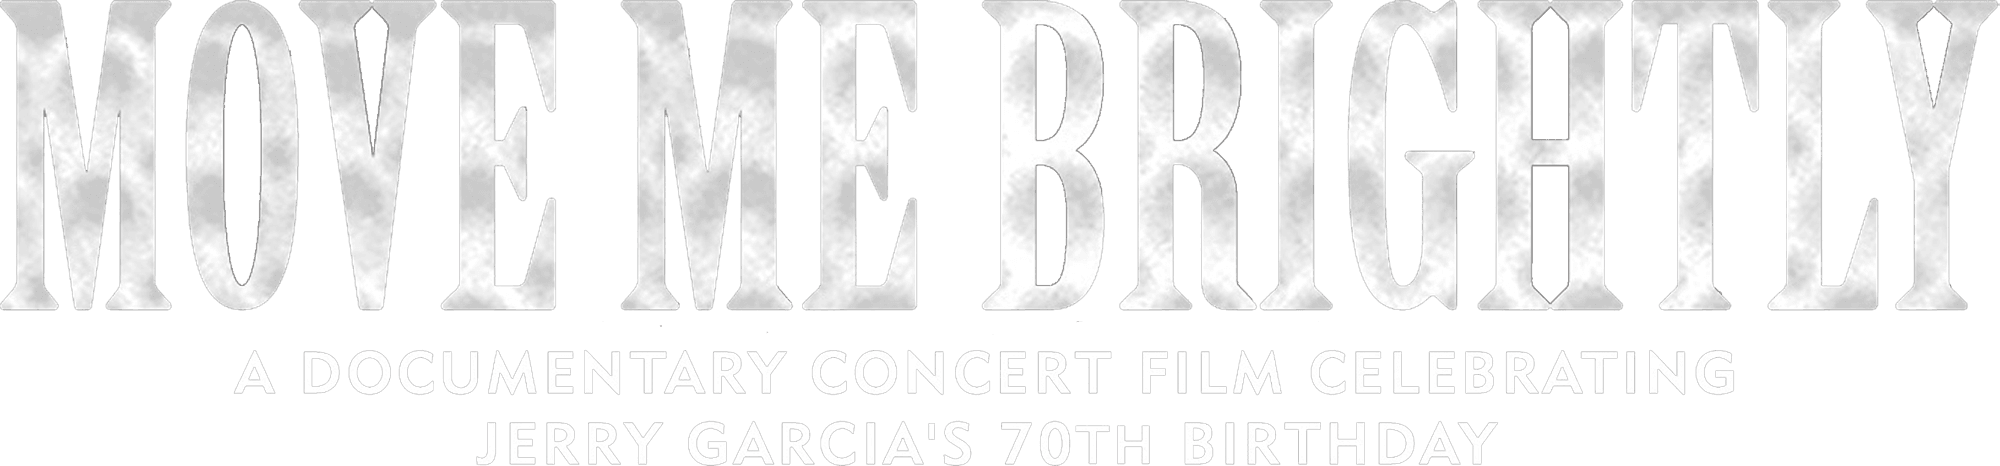 Move Me Brightly - Celebrating Jerry Garcia's 70th Birthday logo